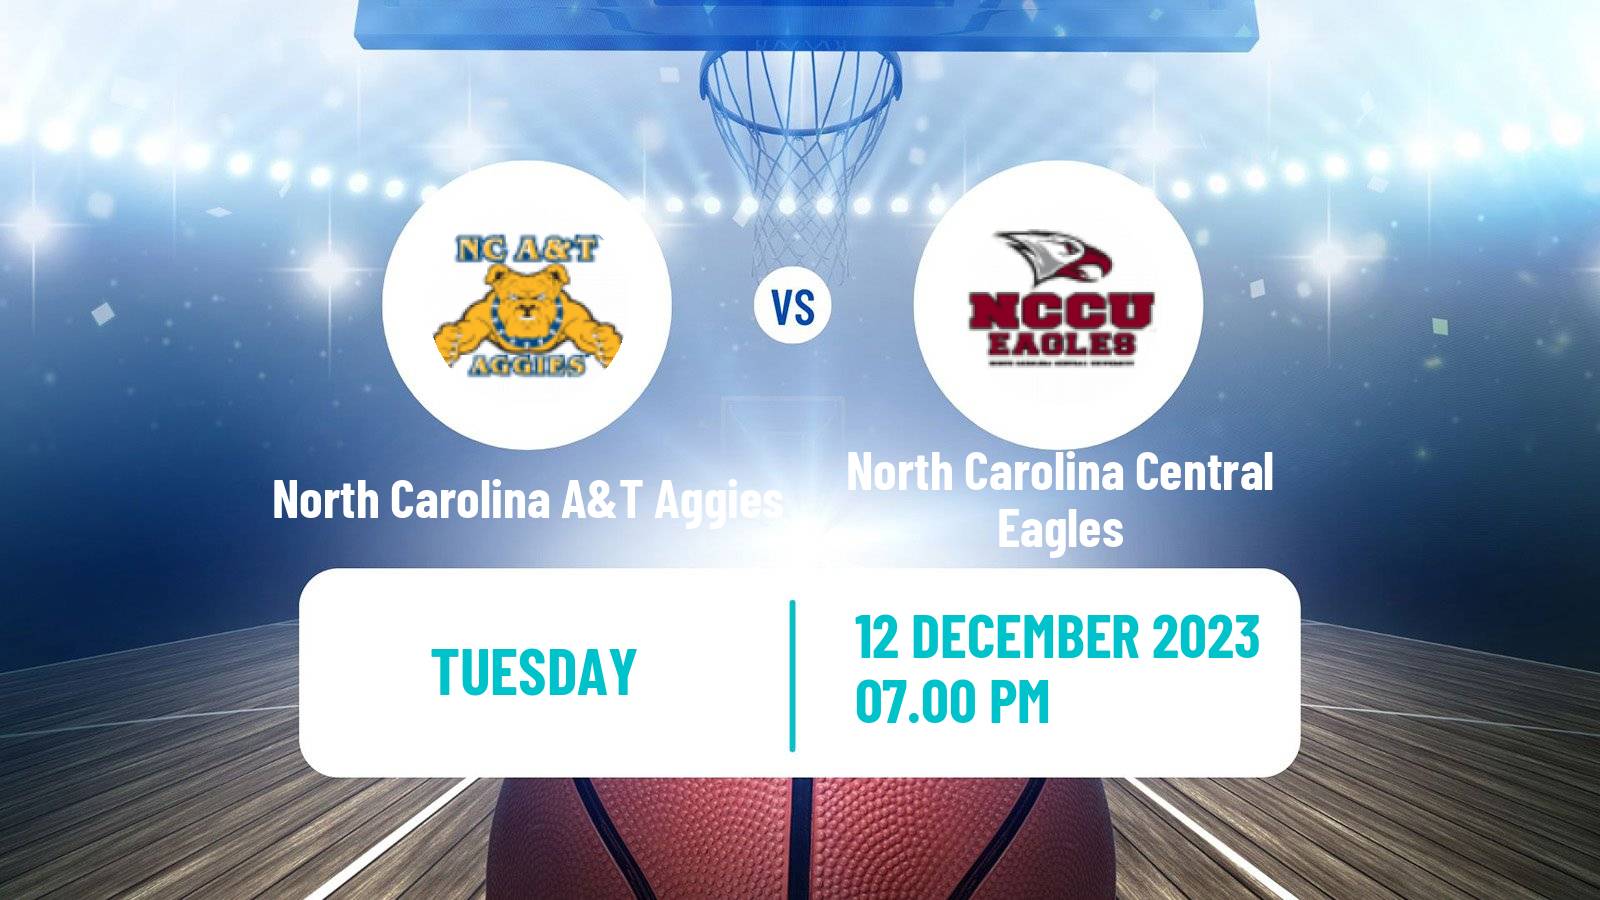 Basketball NCAA College Basketball North Carolina A&T Aggies - North Carolina Central Eagles